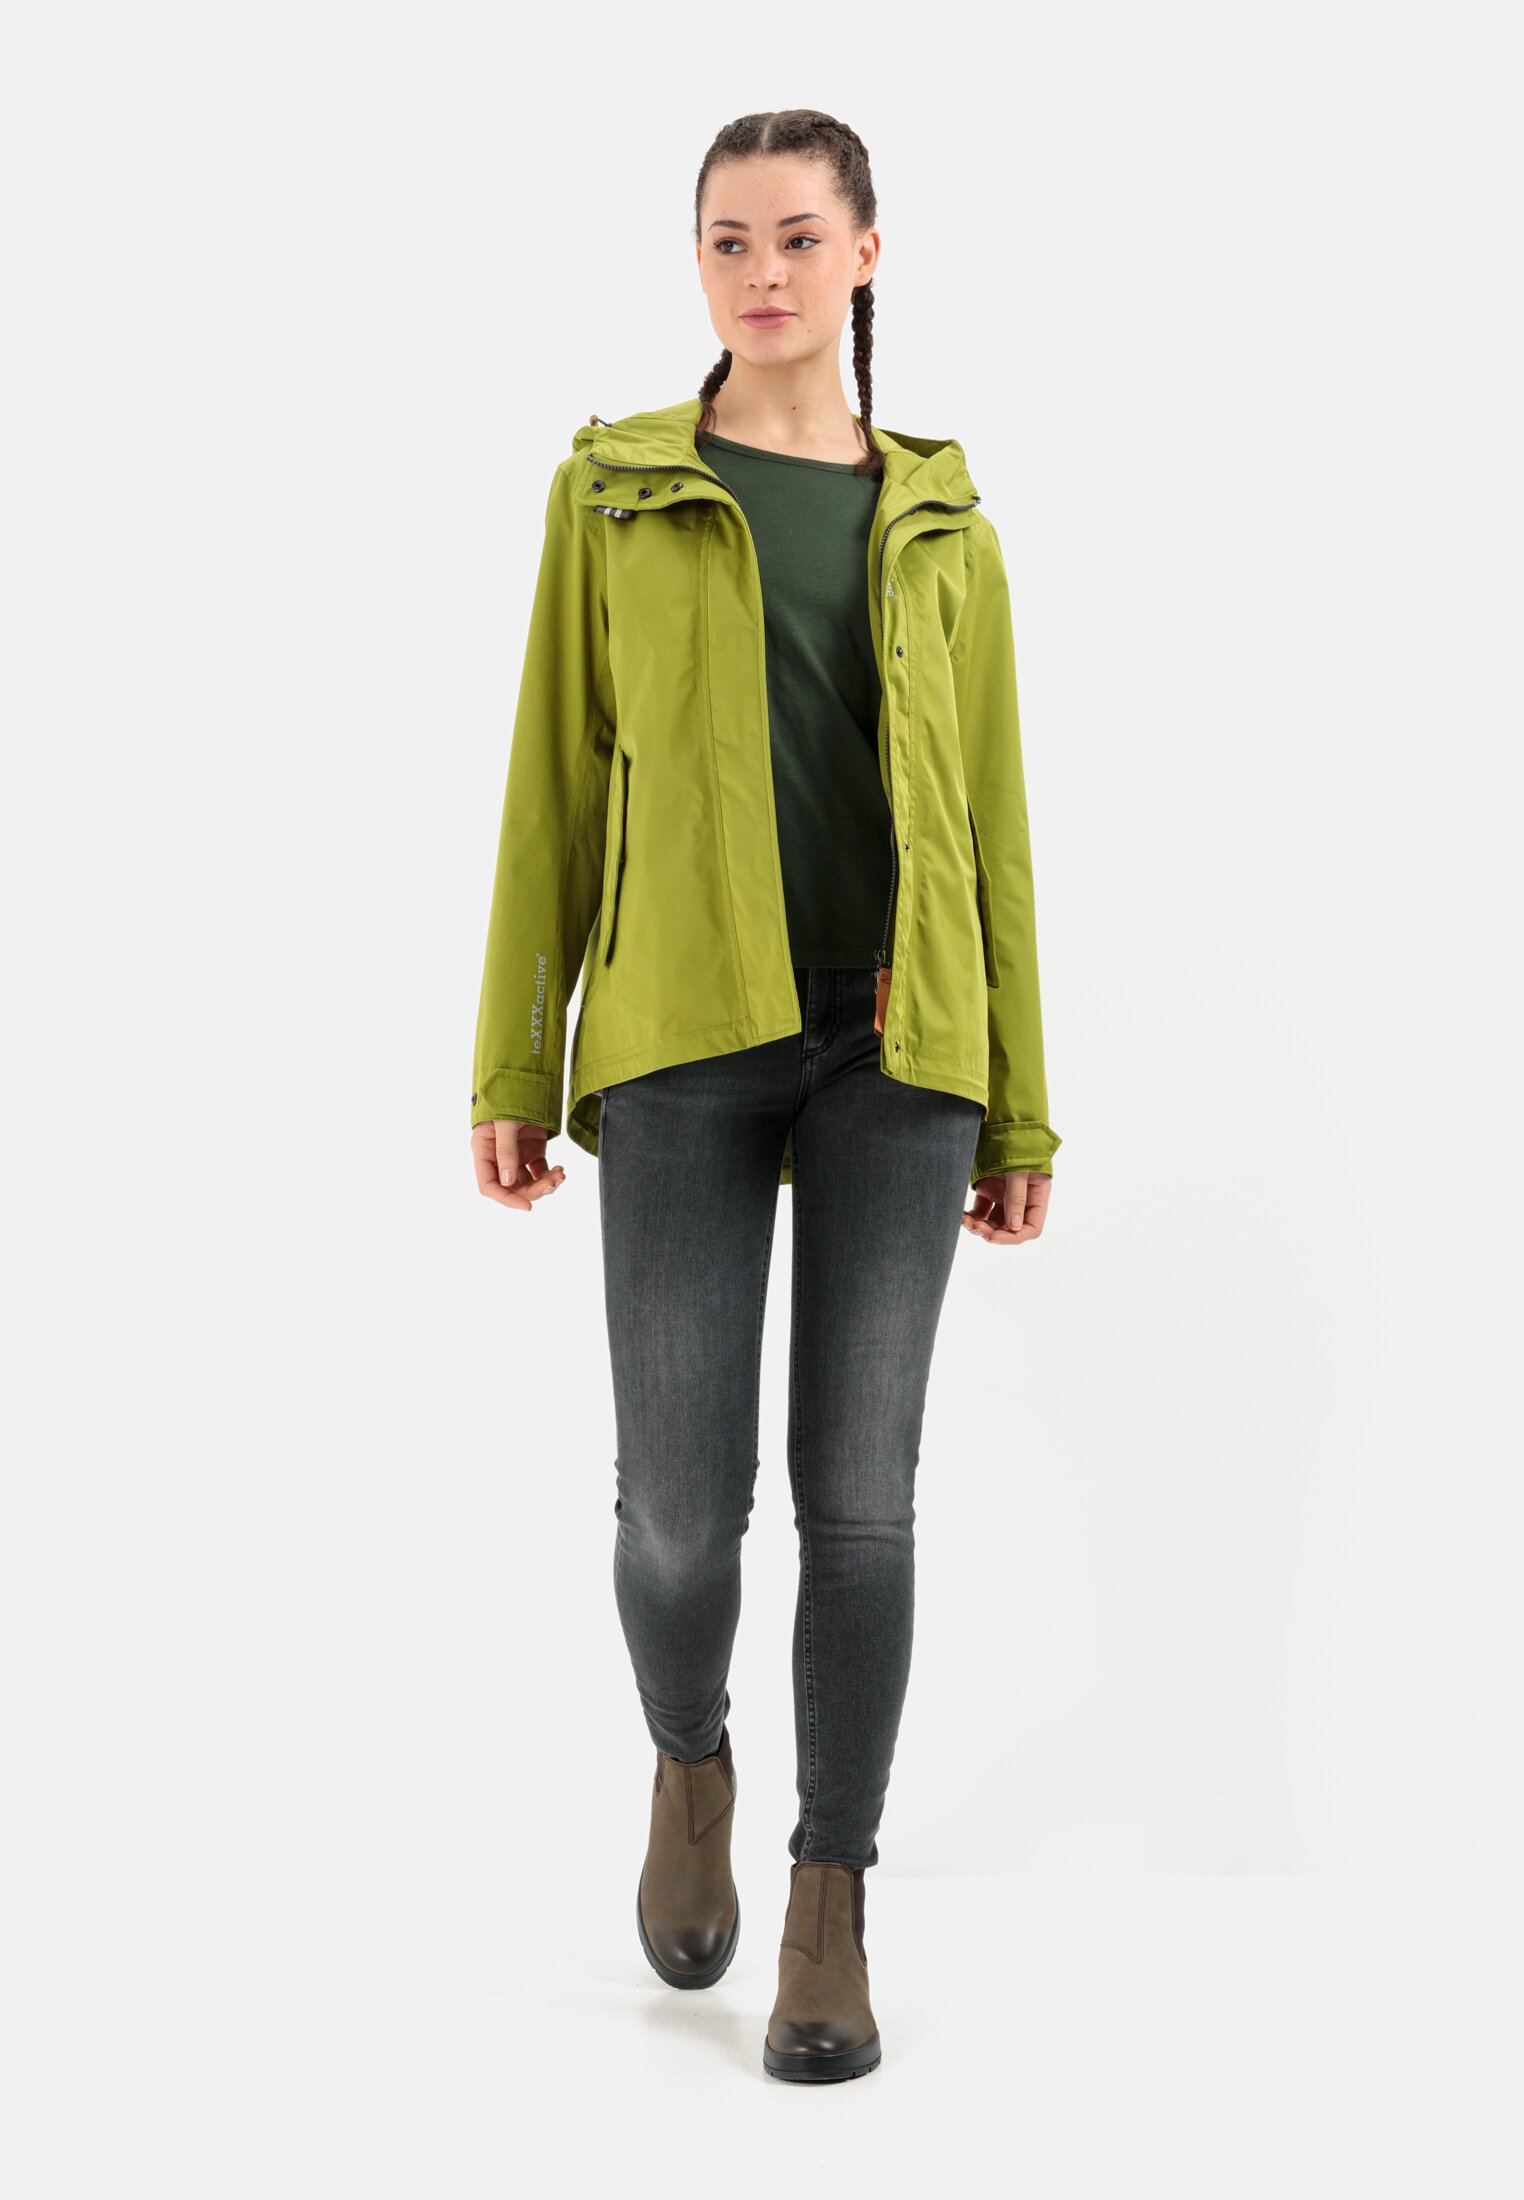 teXXXactive® jacket for Damen in Green | 34 | camel active